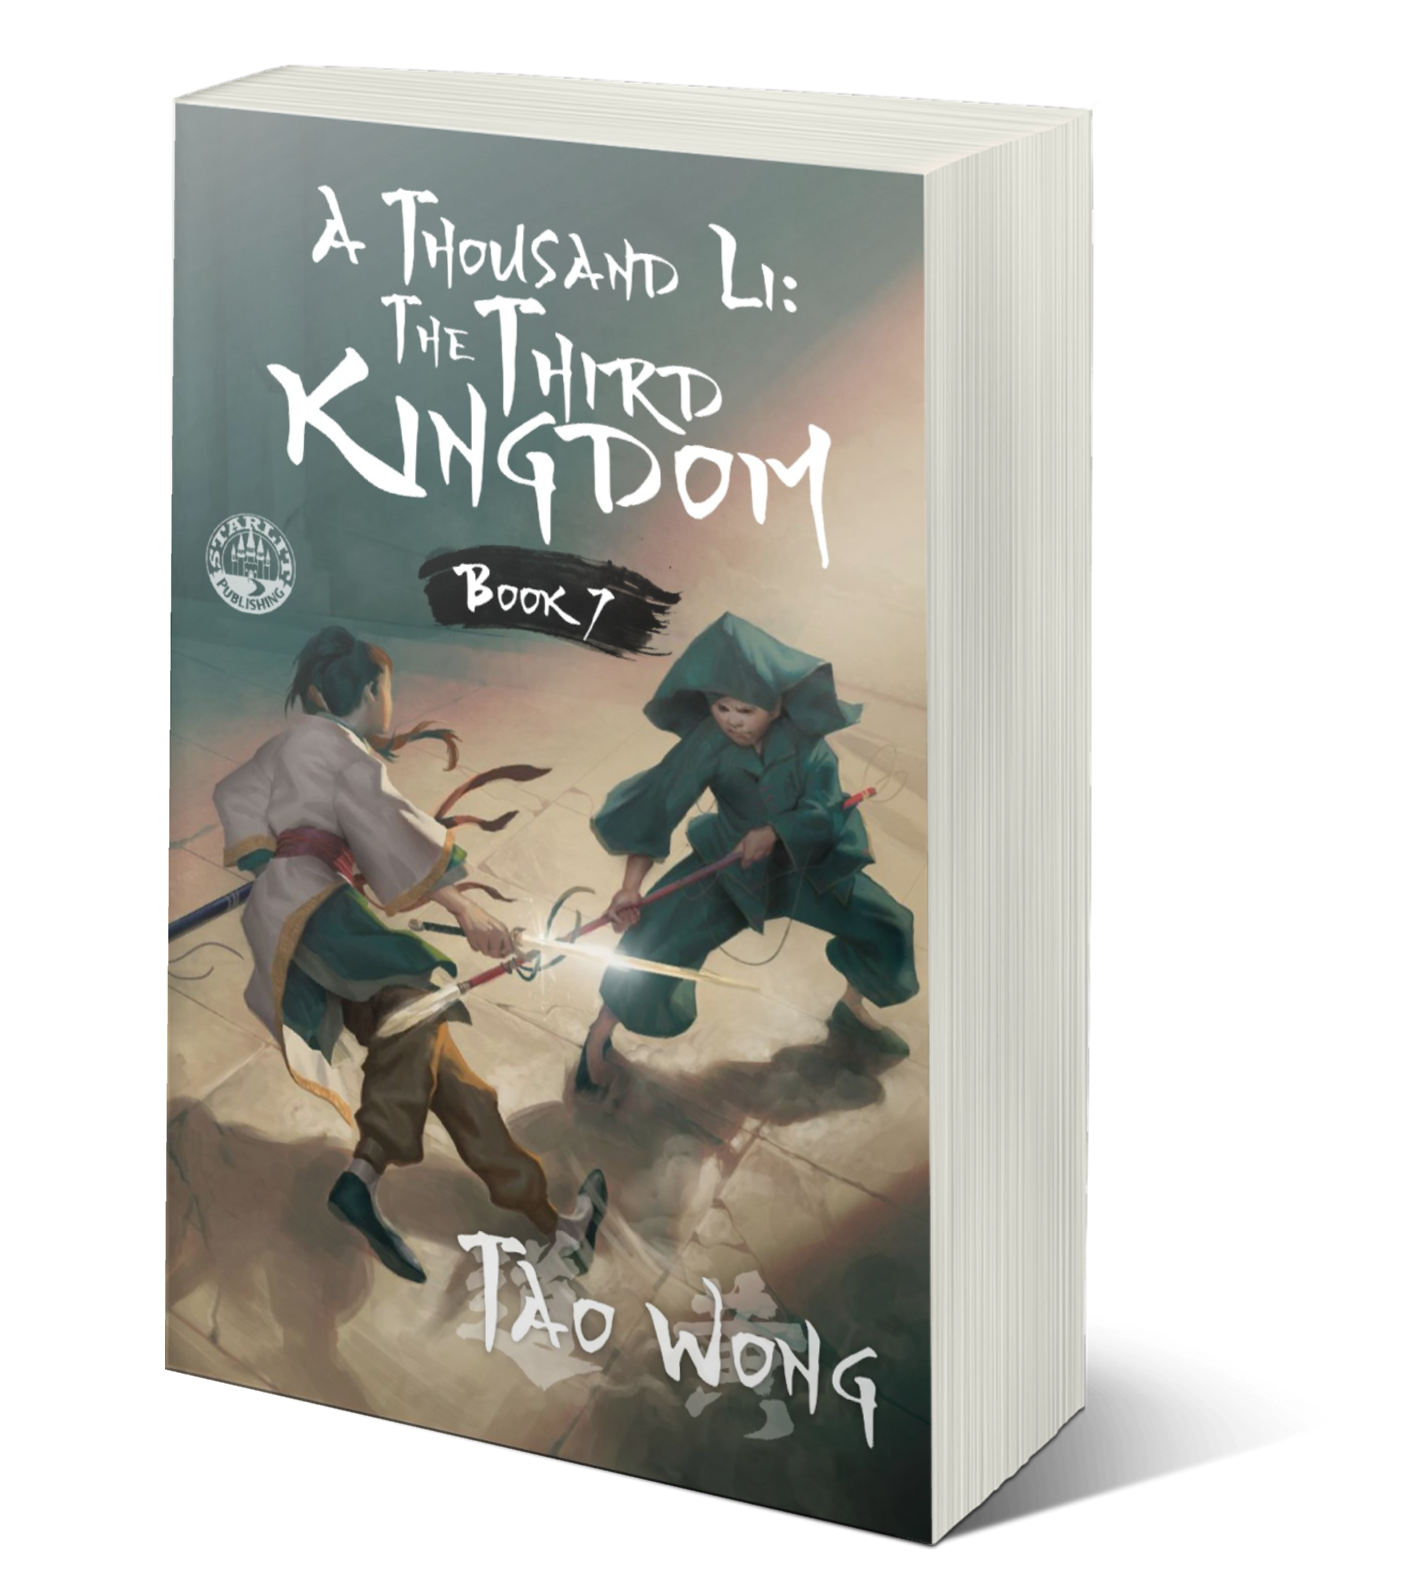 The Third Kingdom (A Thousand Li #7)